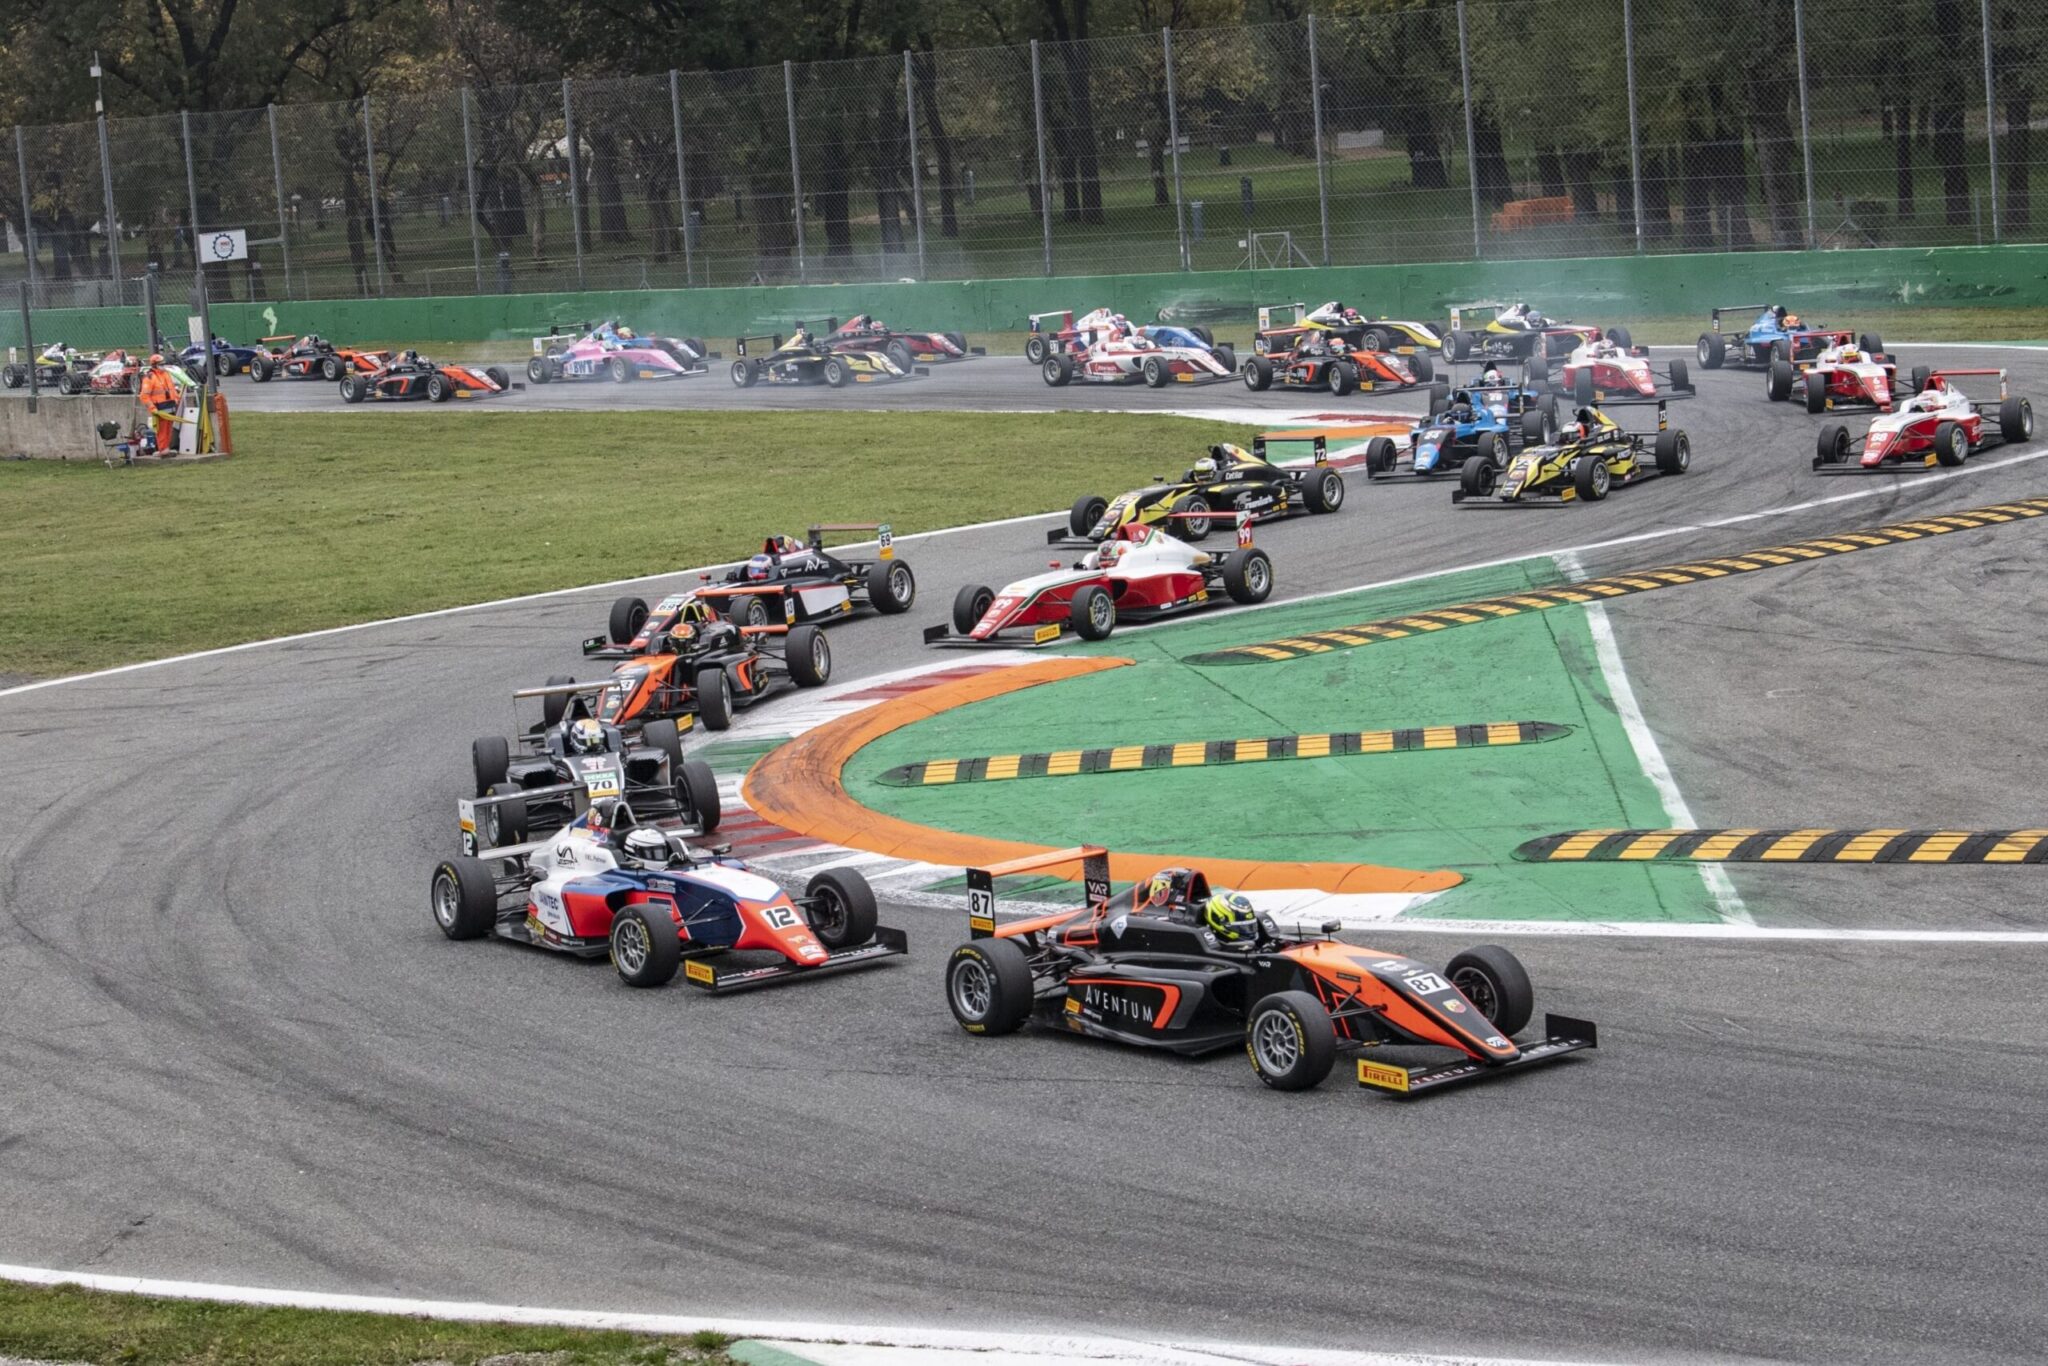 Guida rapida alla Formula 4 Italiana